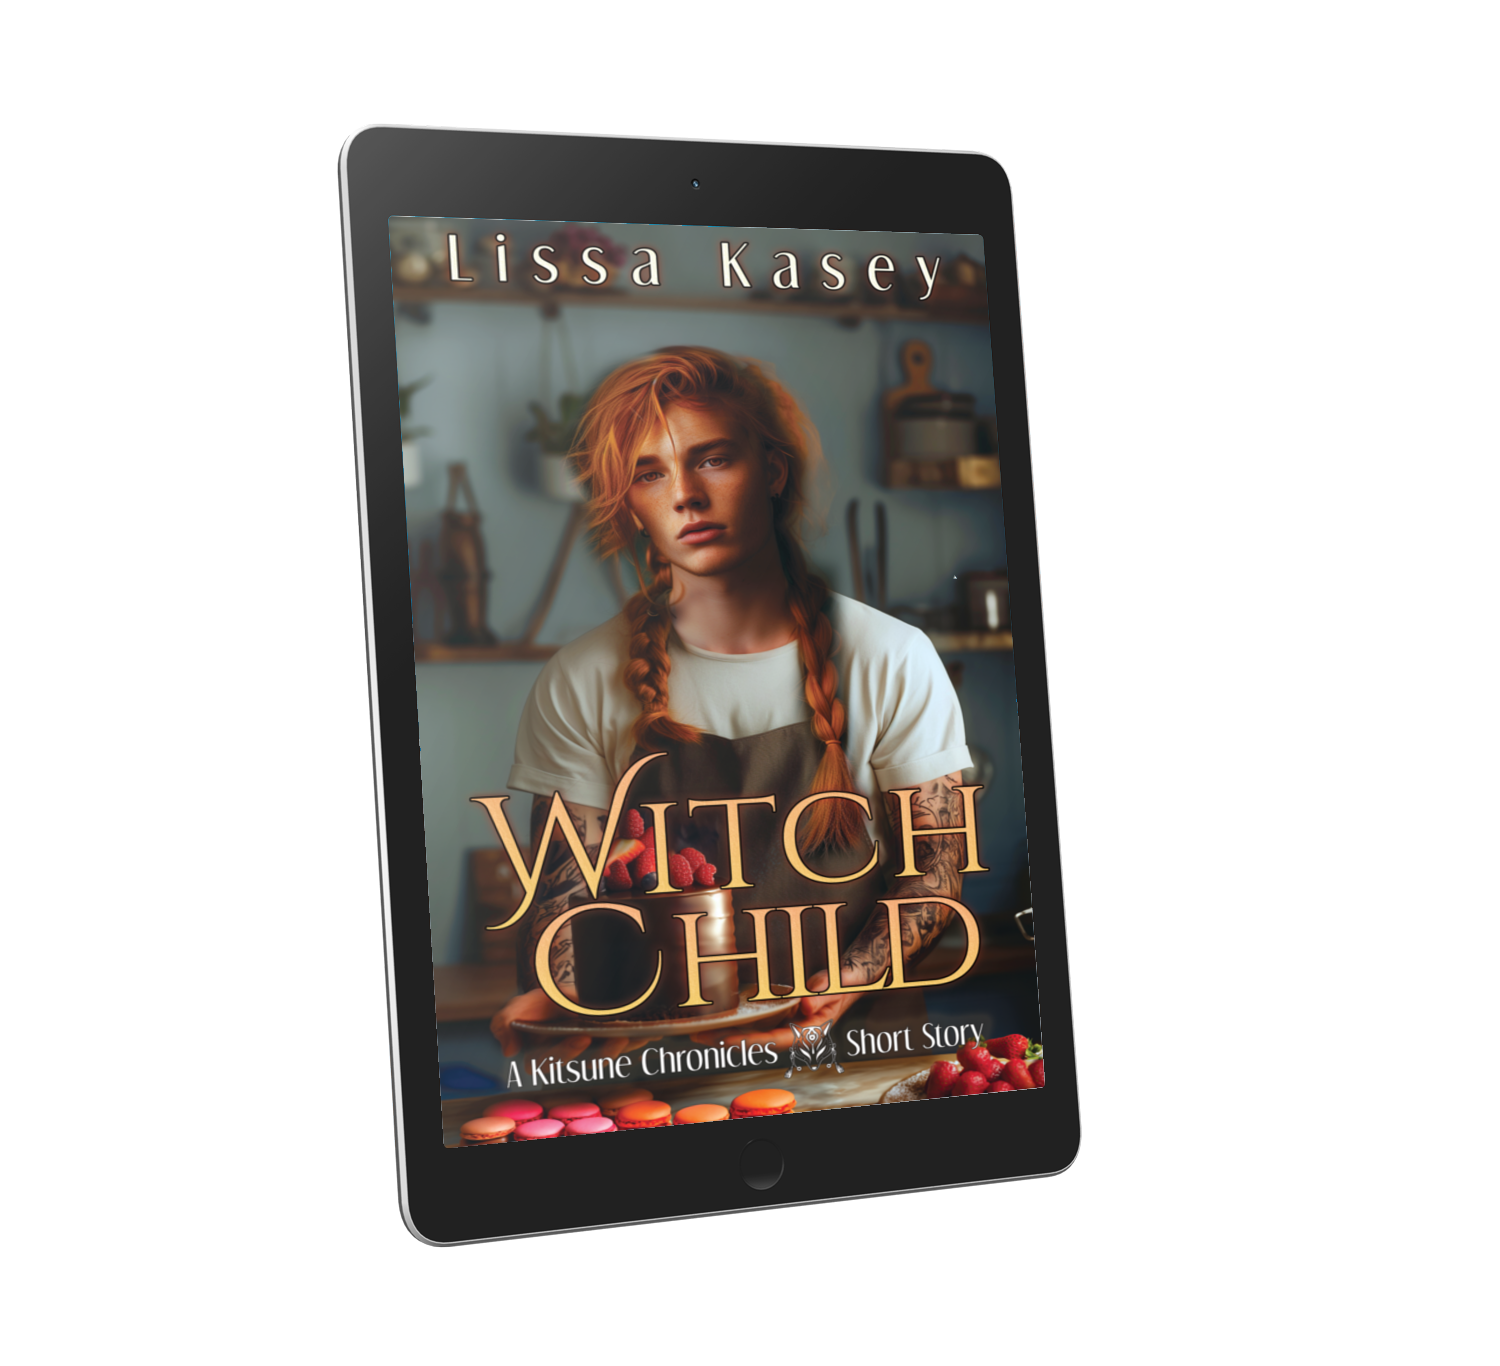 WitchChild by Lissa Kasey A kitsune Chronicles Short story 4.5